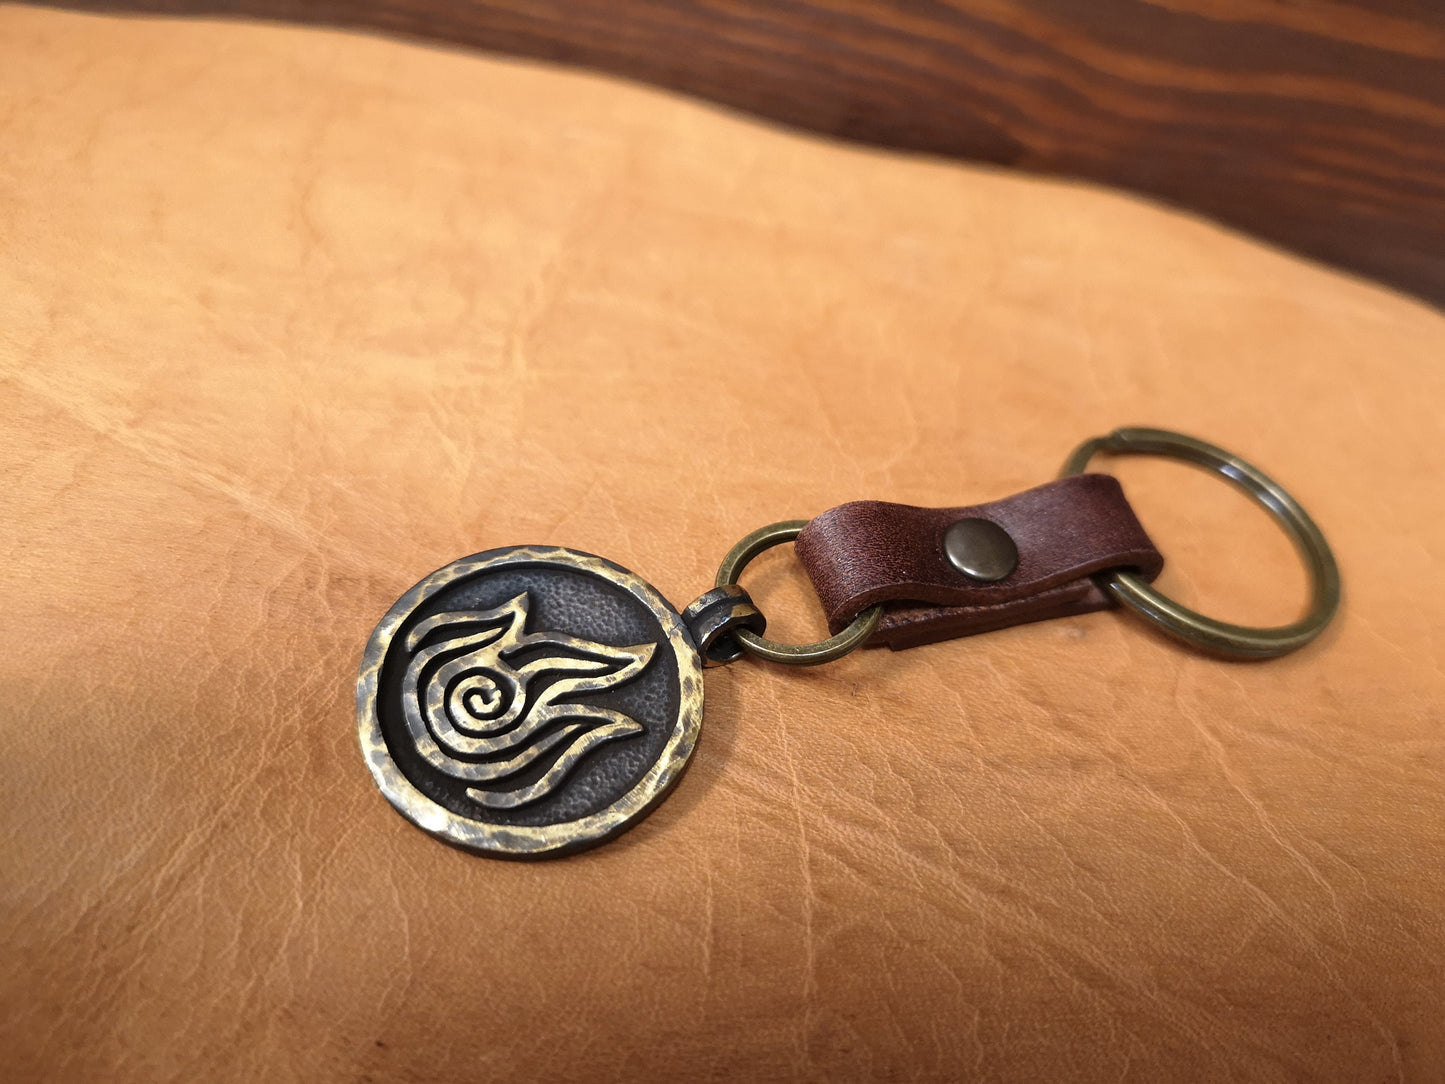 Avatar The Last Airbender Fire Nation Keychain Accessory Cosplay - Baldur Jewelry